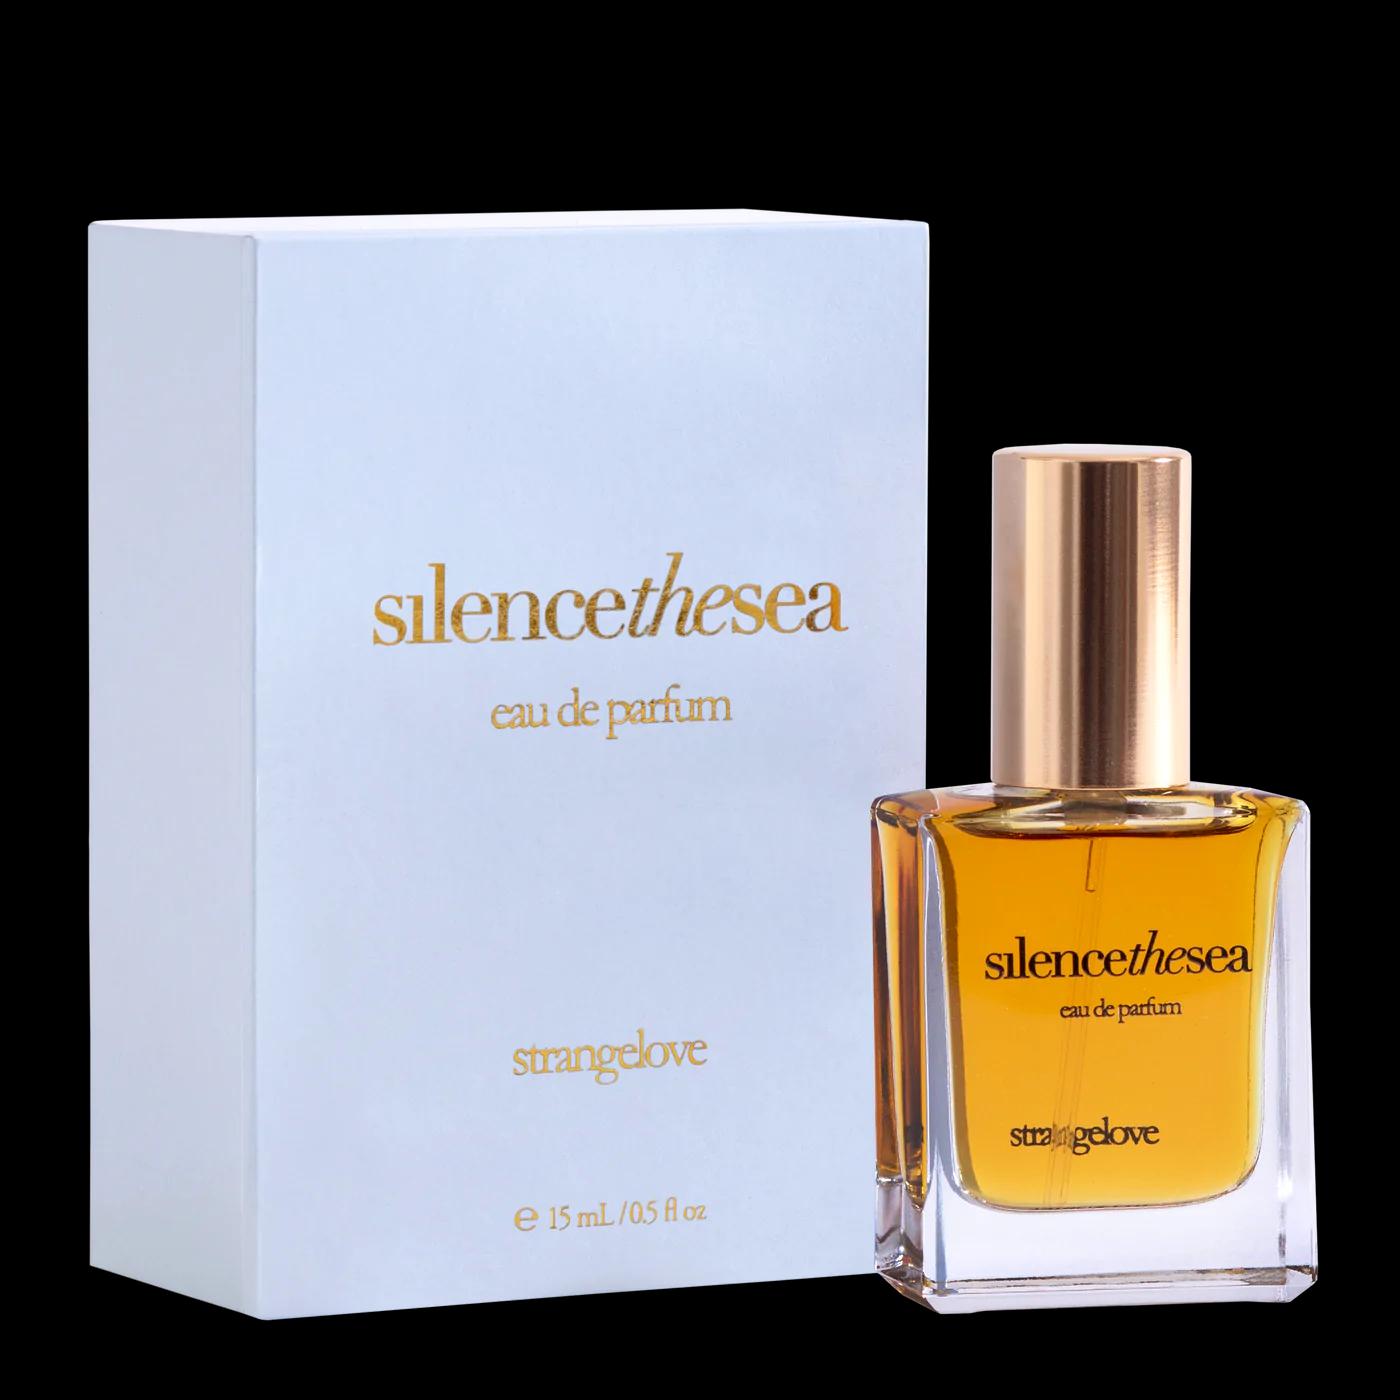 strangelove - silencethesea 15 ml with box | Perfume Lounge